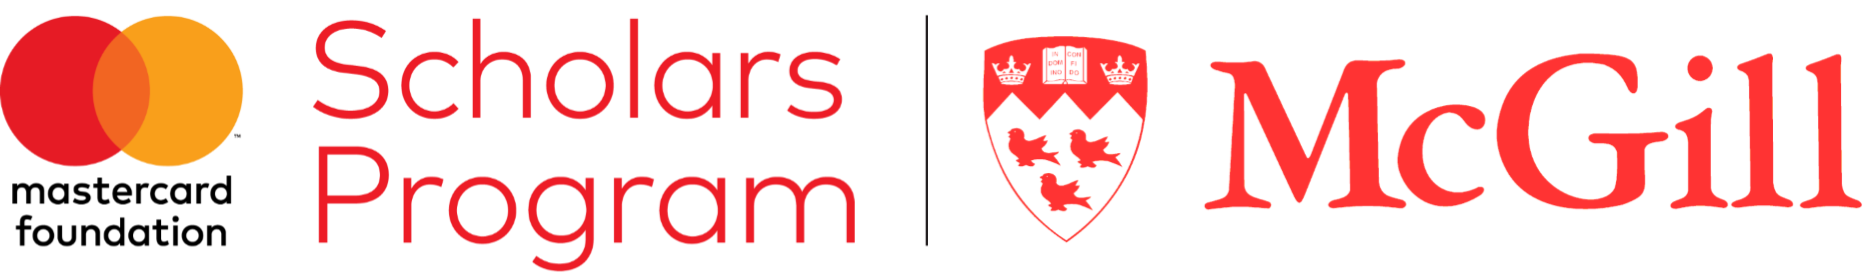 Mastercard Foundation Scholars Program at McGill Logo